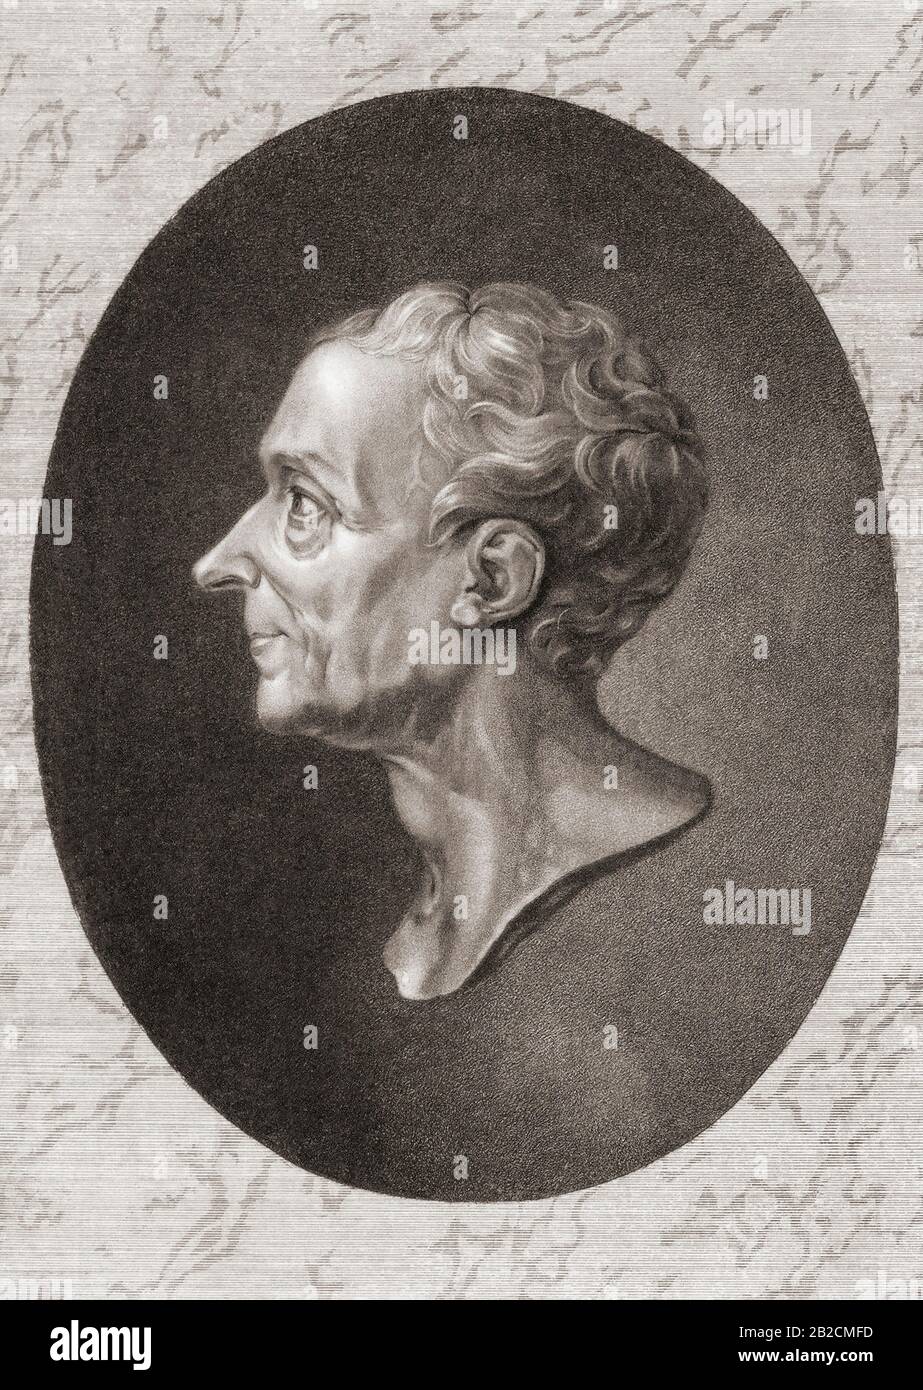 Charles-Louis de Secondat, Baron de La Brède et de Montesquieu, 1689 - 1755, alias Montesquieu. Französischer Richter, Briefmann und politischer Philosoph. Stockfoto